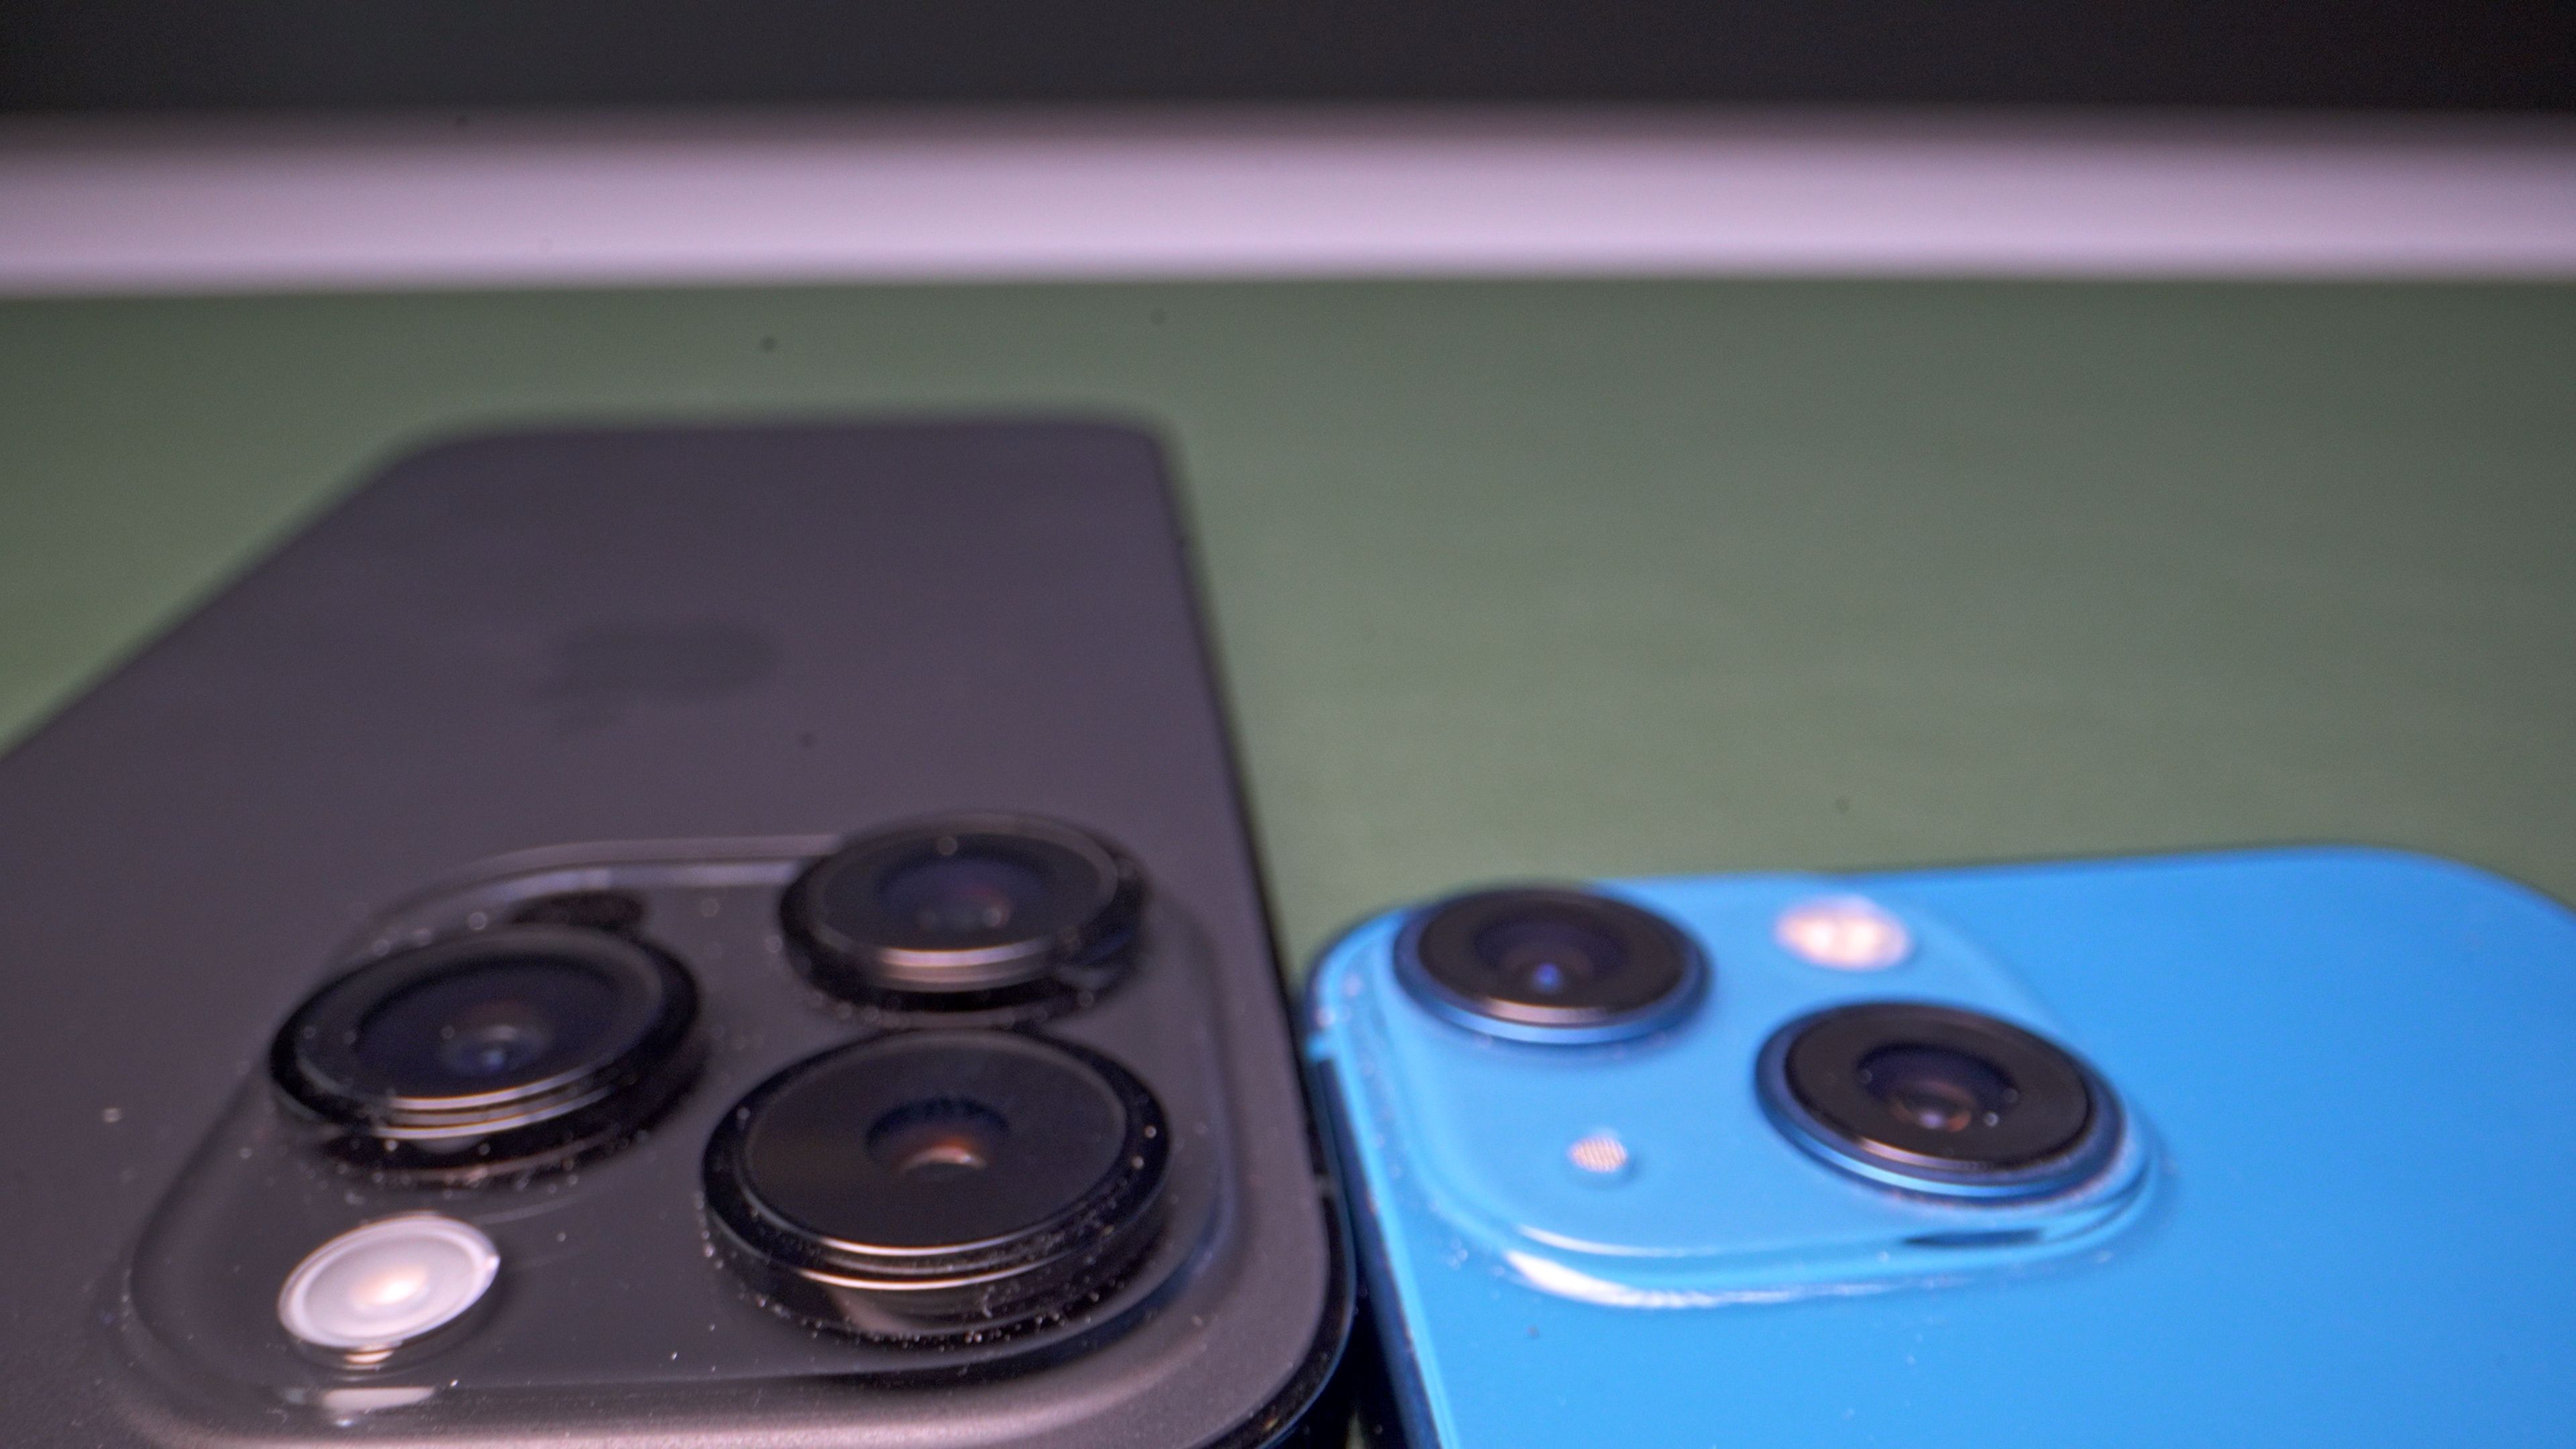 iPhone 14 Pro - Rear Cameras vs iPhone 13 Mini